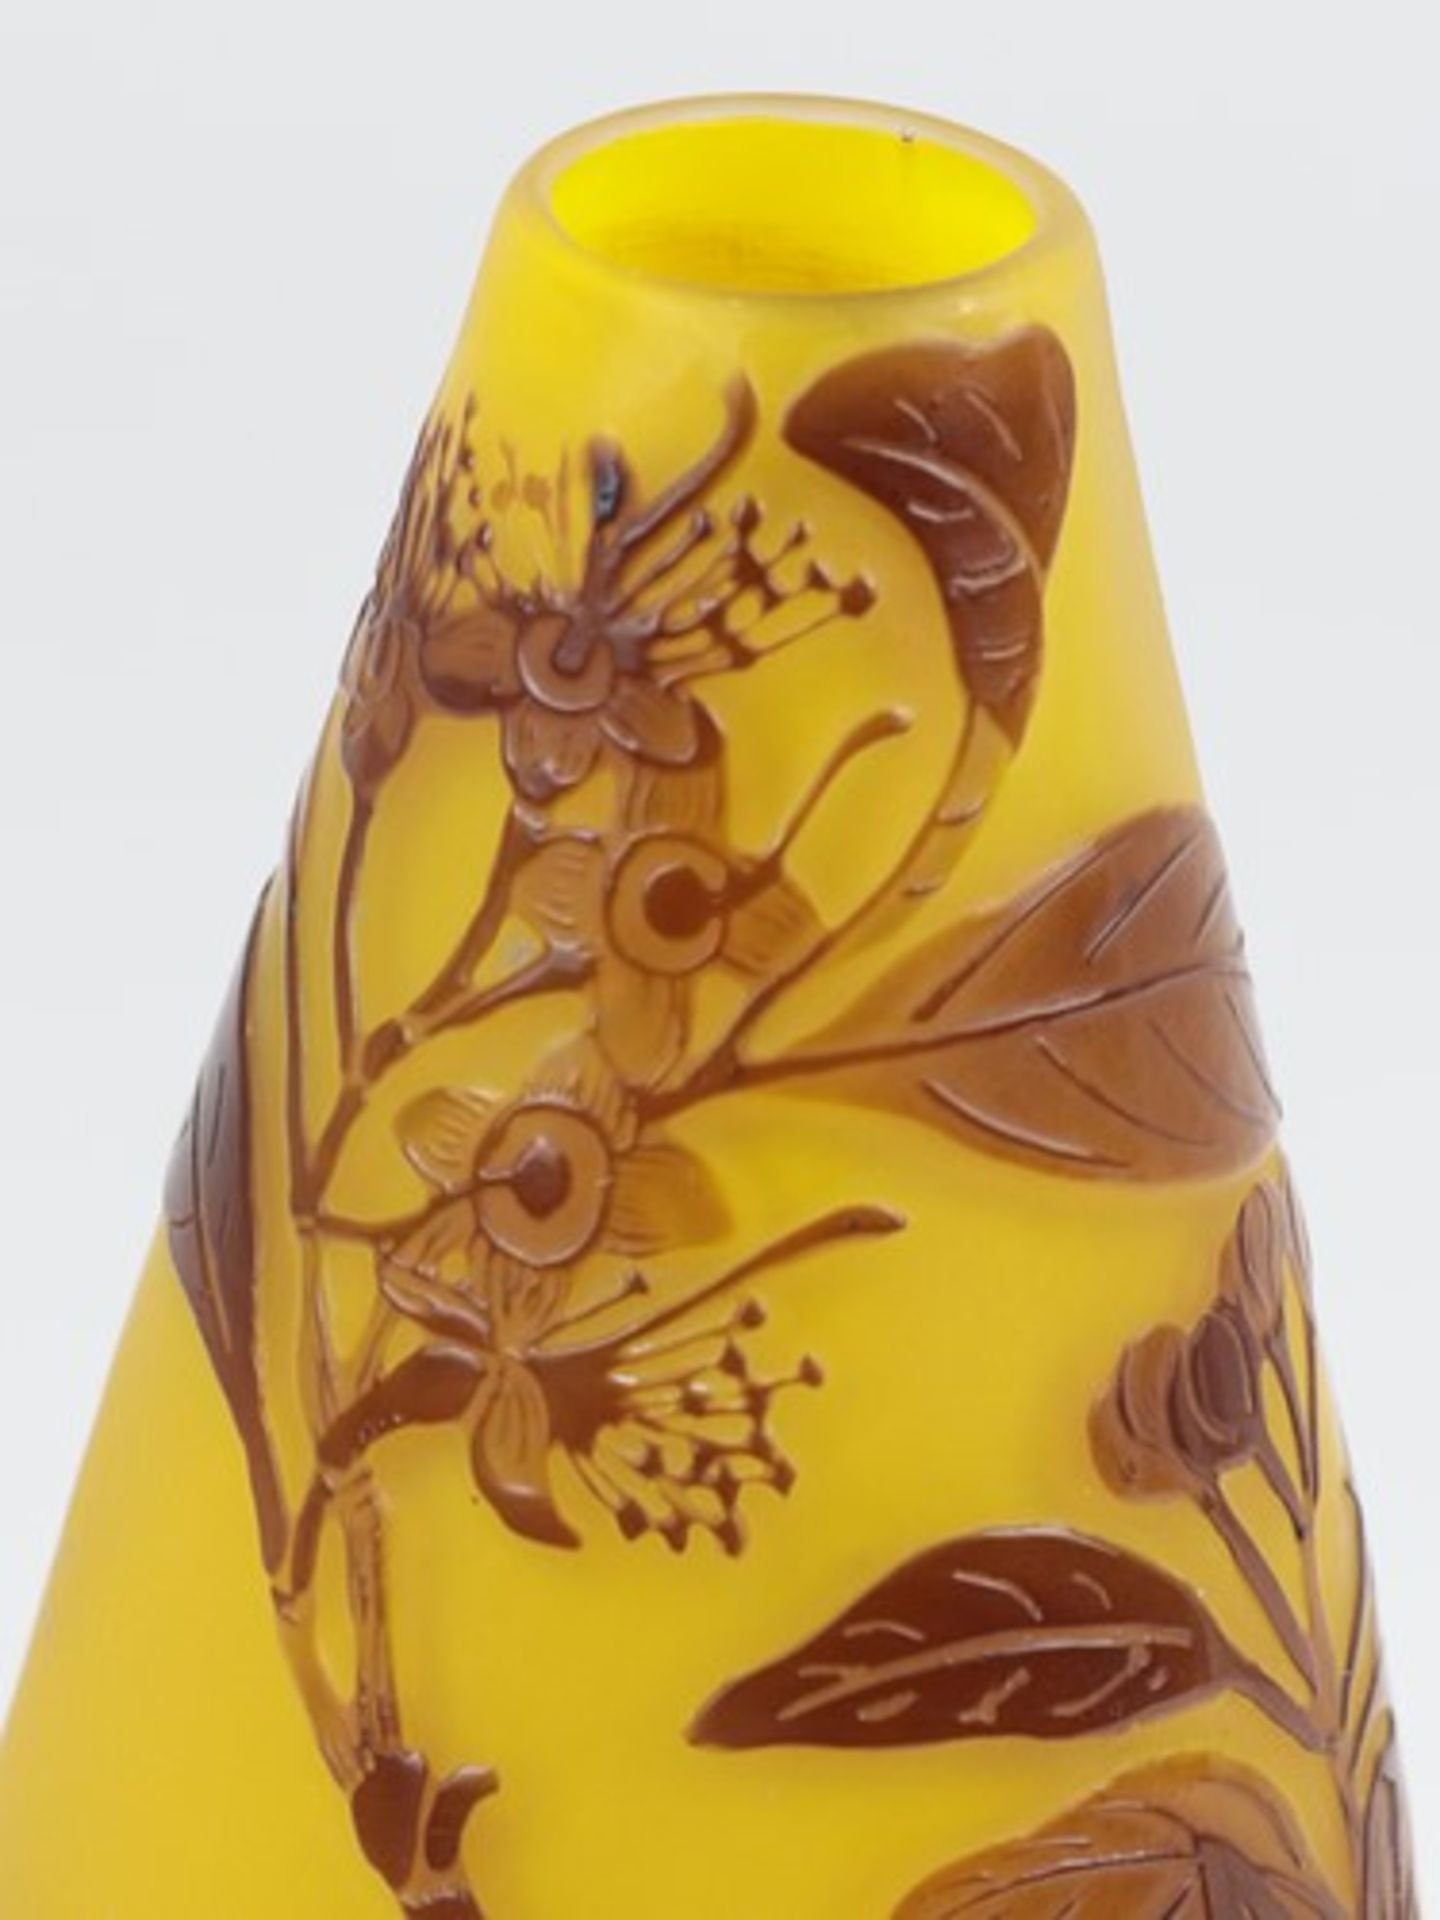 Gallé - Vase um 1900, Jugendstil, Emile Gallé, Frankreich, farbloses mattiertes Glas, runder Stand, - Bild 5 aus 5